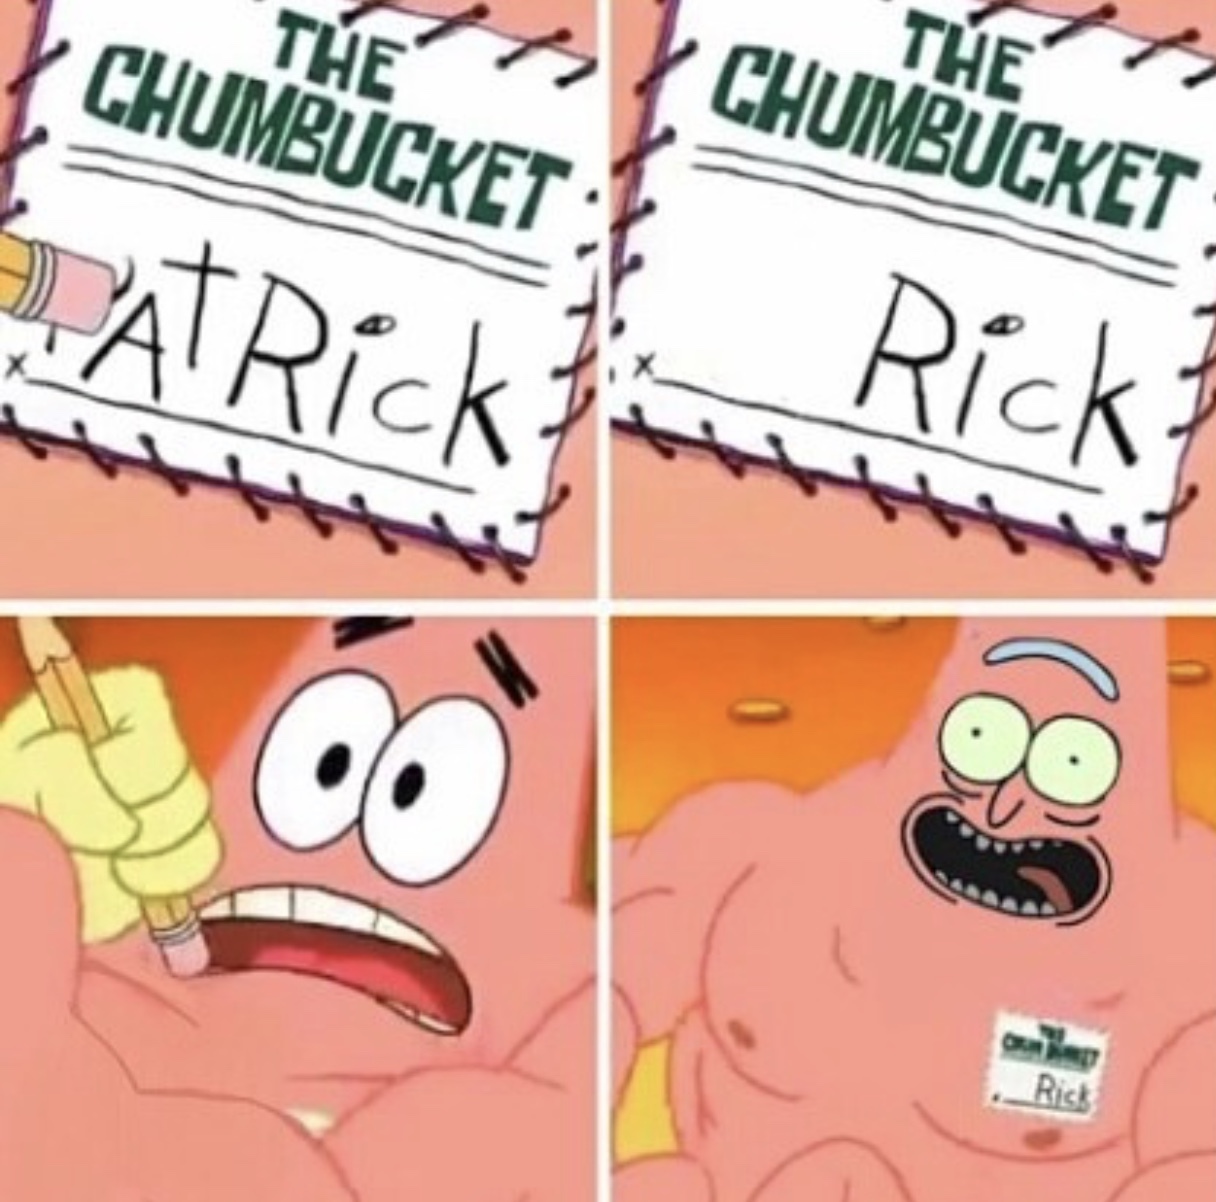 Patrick Or Rick Meme By Crow Se7en Memedroid